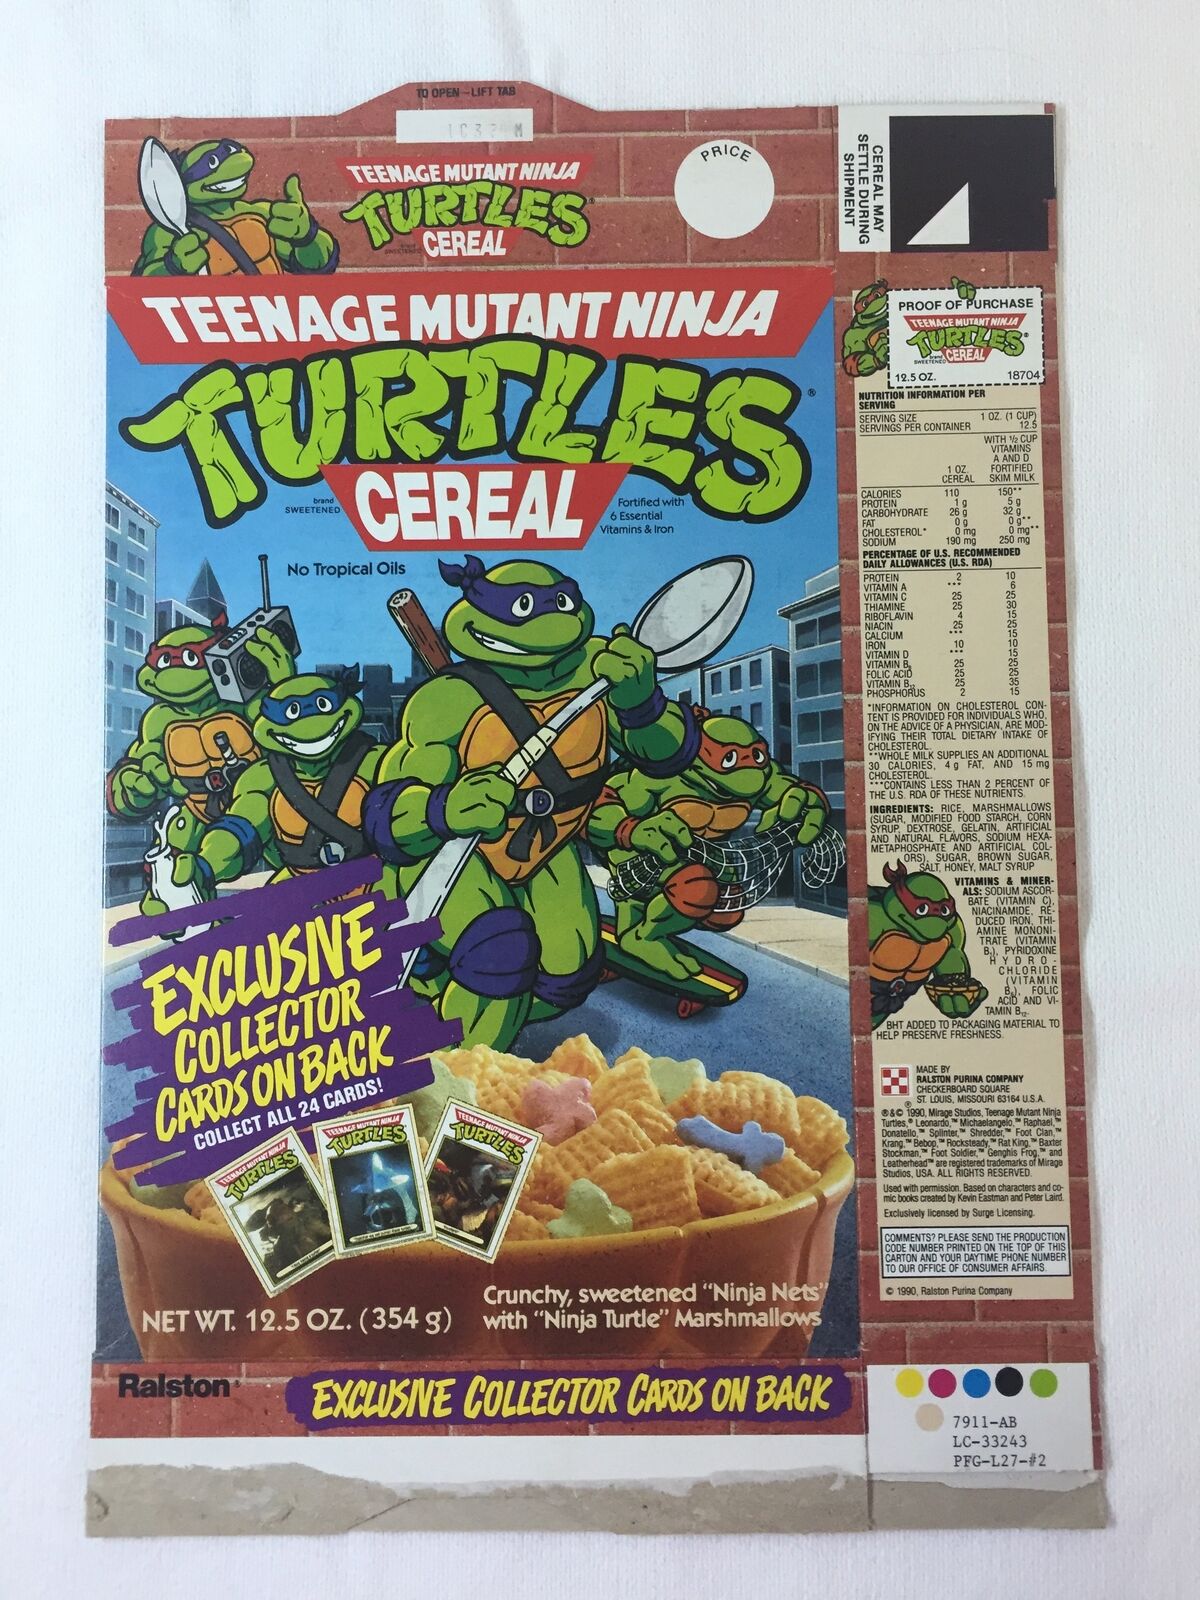 1990 Ralston TEENAGE MUTANT NINJA TURTLES cereal box with uncut cards